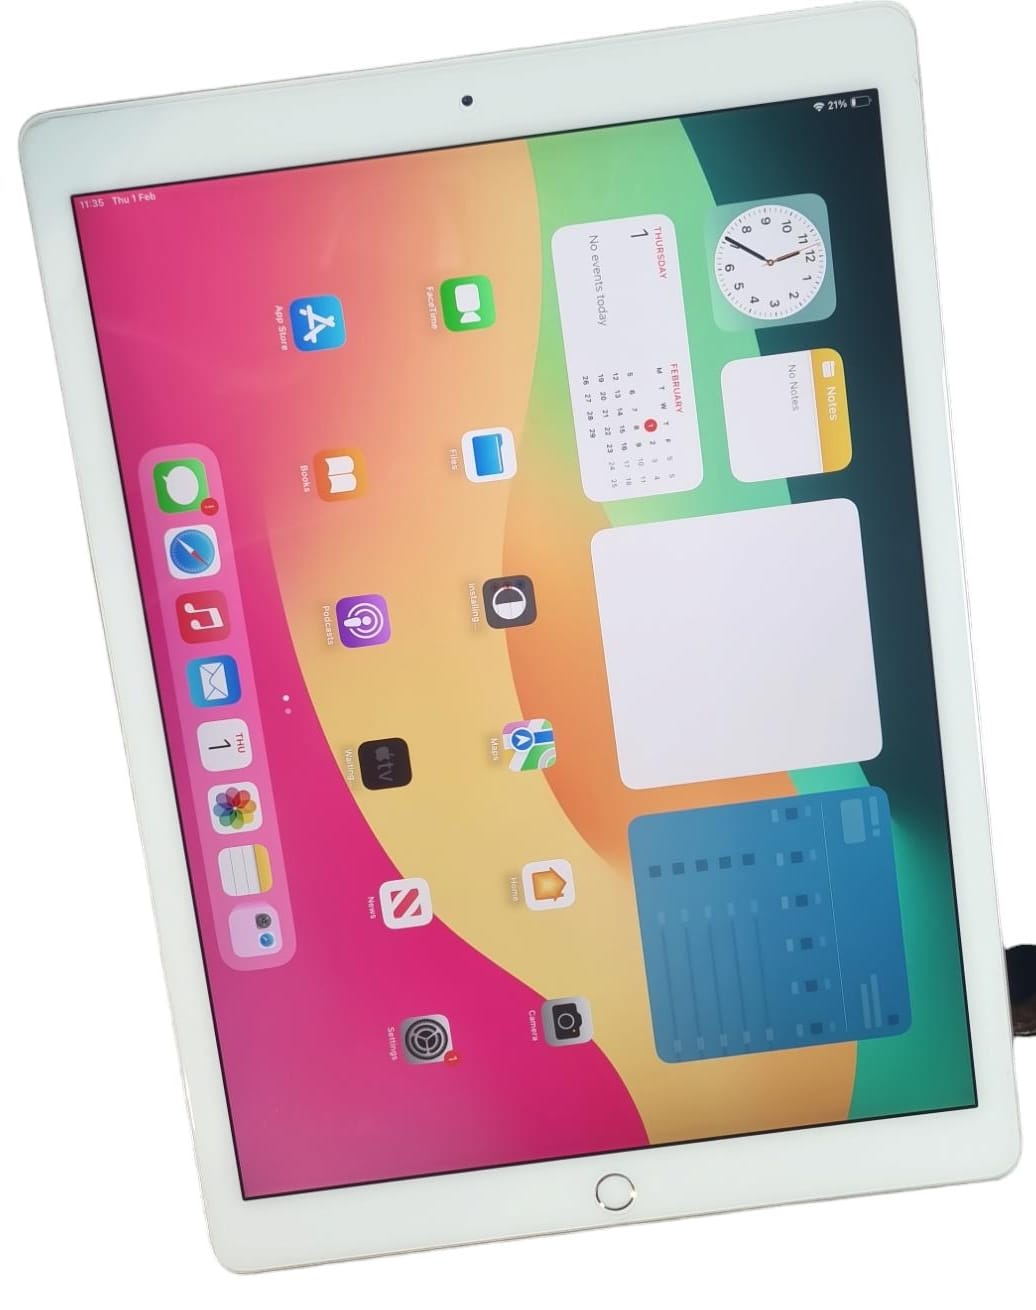 iPad Pro (12.9-inch) (2nd generation) Wi-Fi - 64GB - Model A1670 - Gold - No Box